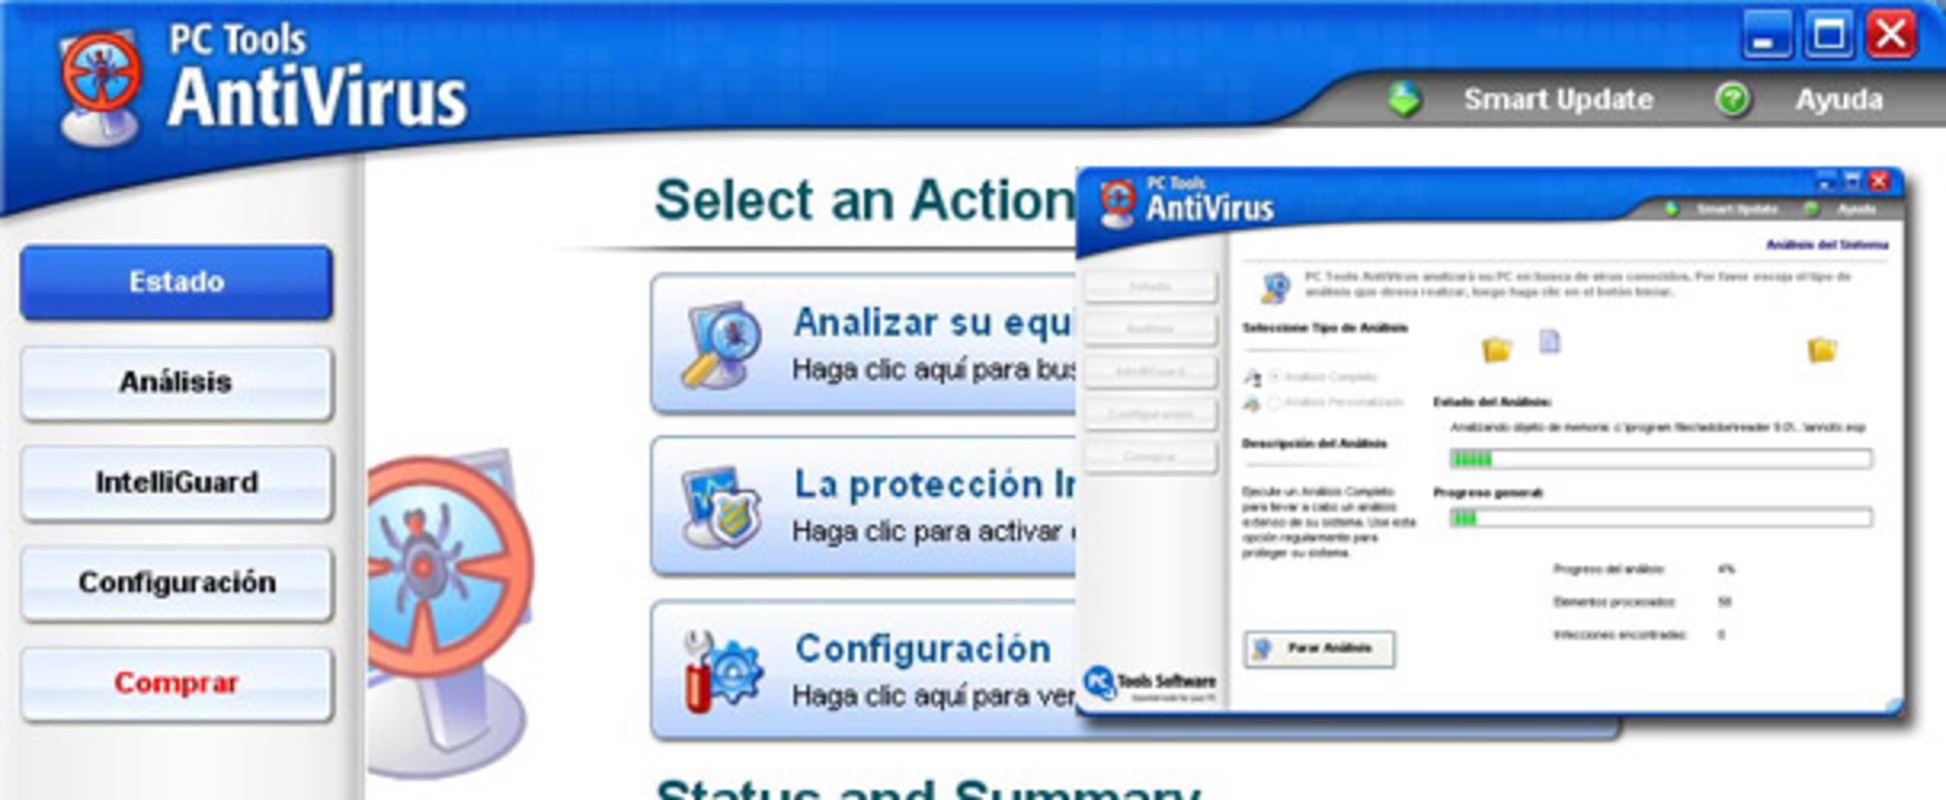 PC Tools Antivirus 6.1 for Windows Screenshot 1